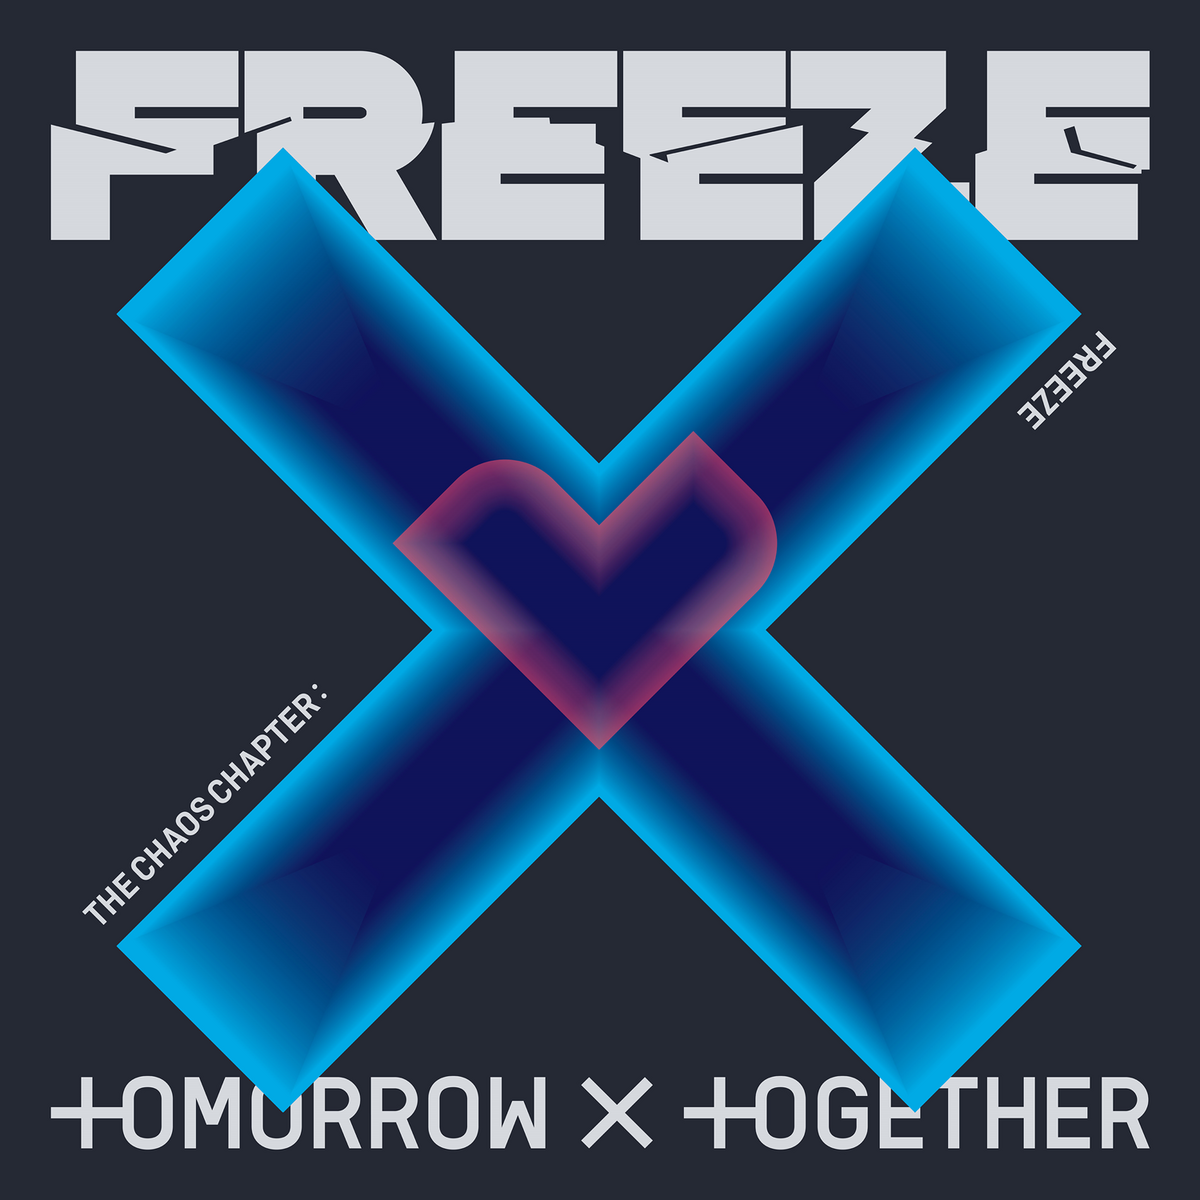 Txt freeze